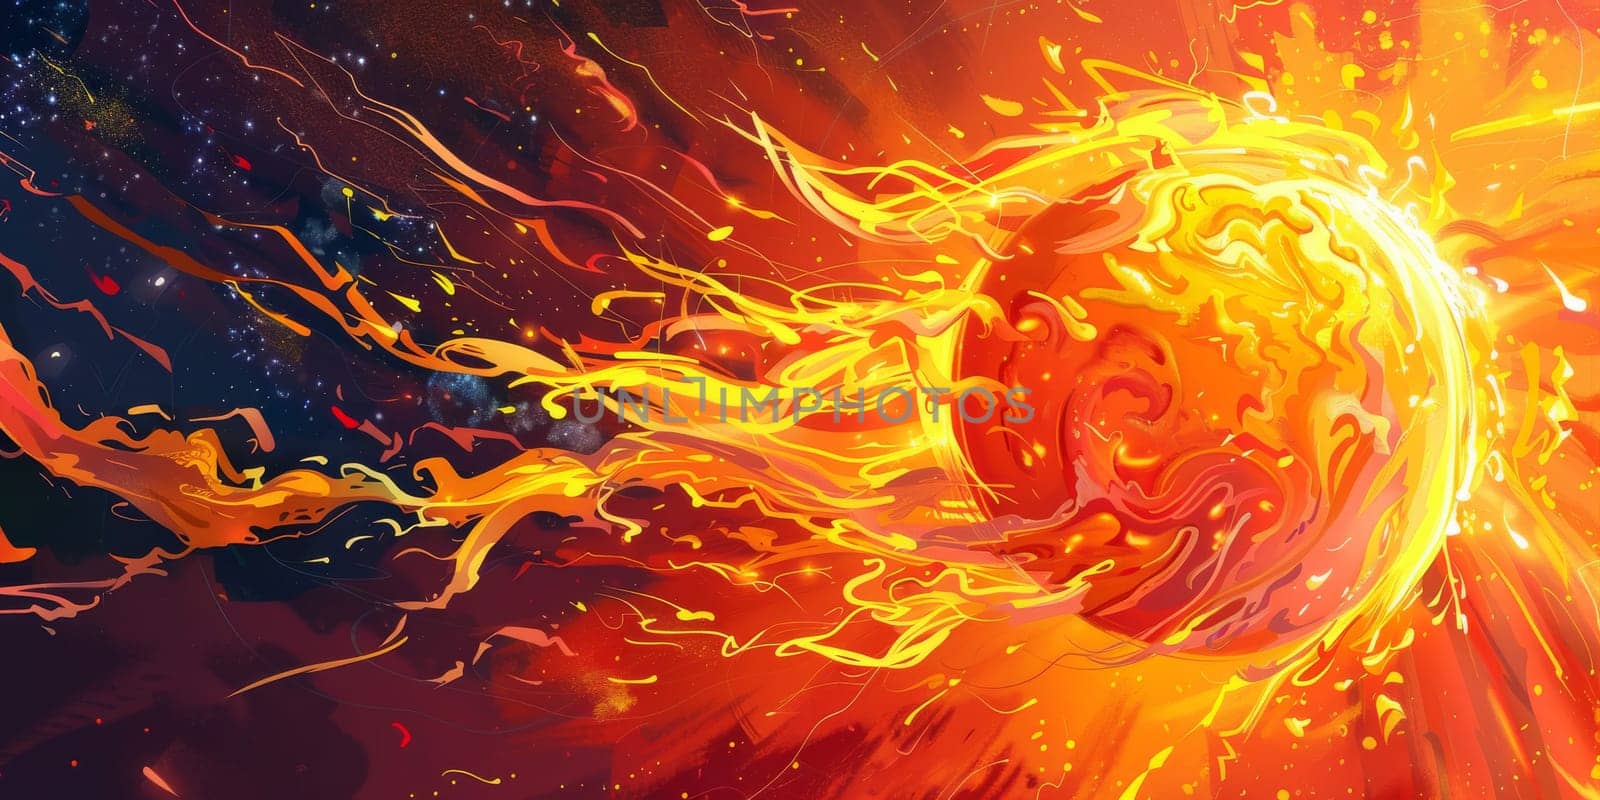 Painting showing a sun emitting flames by Kadula